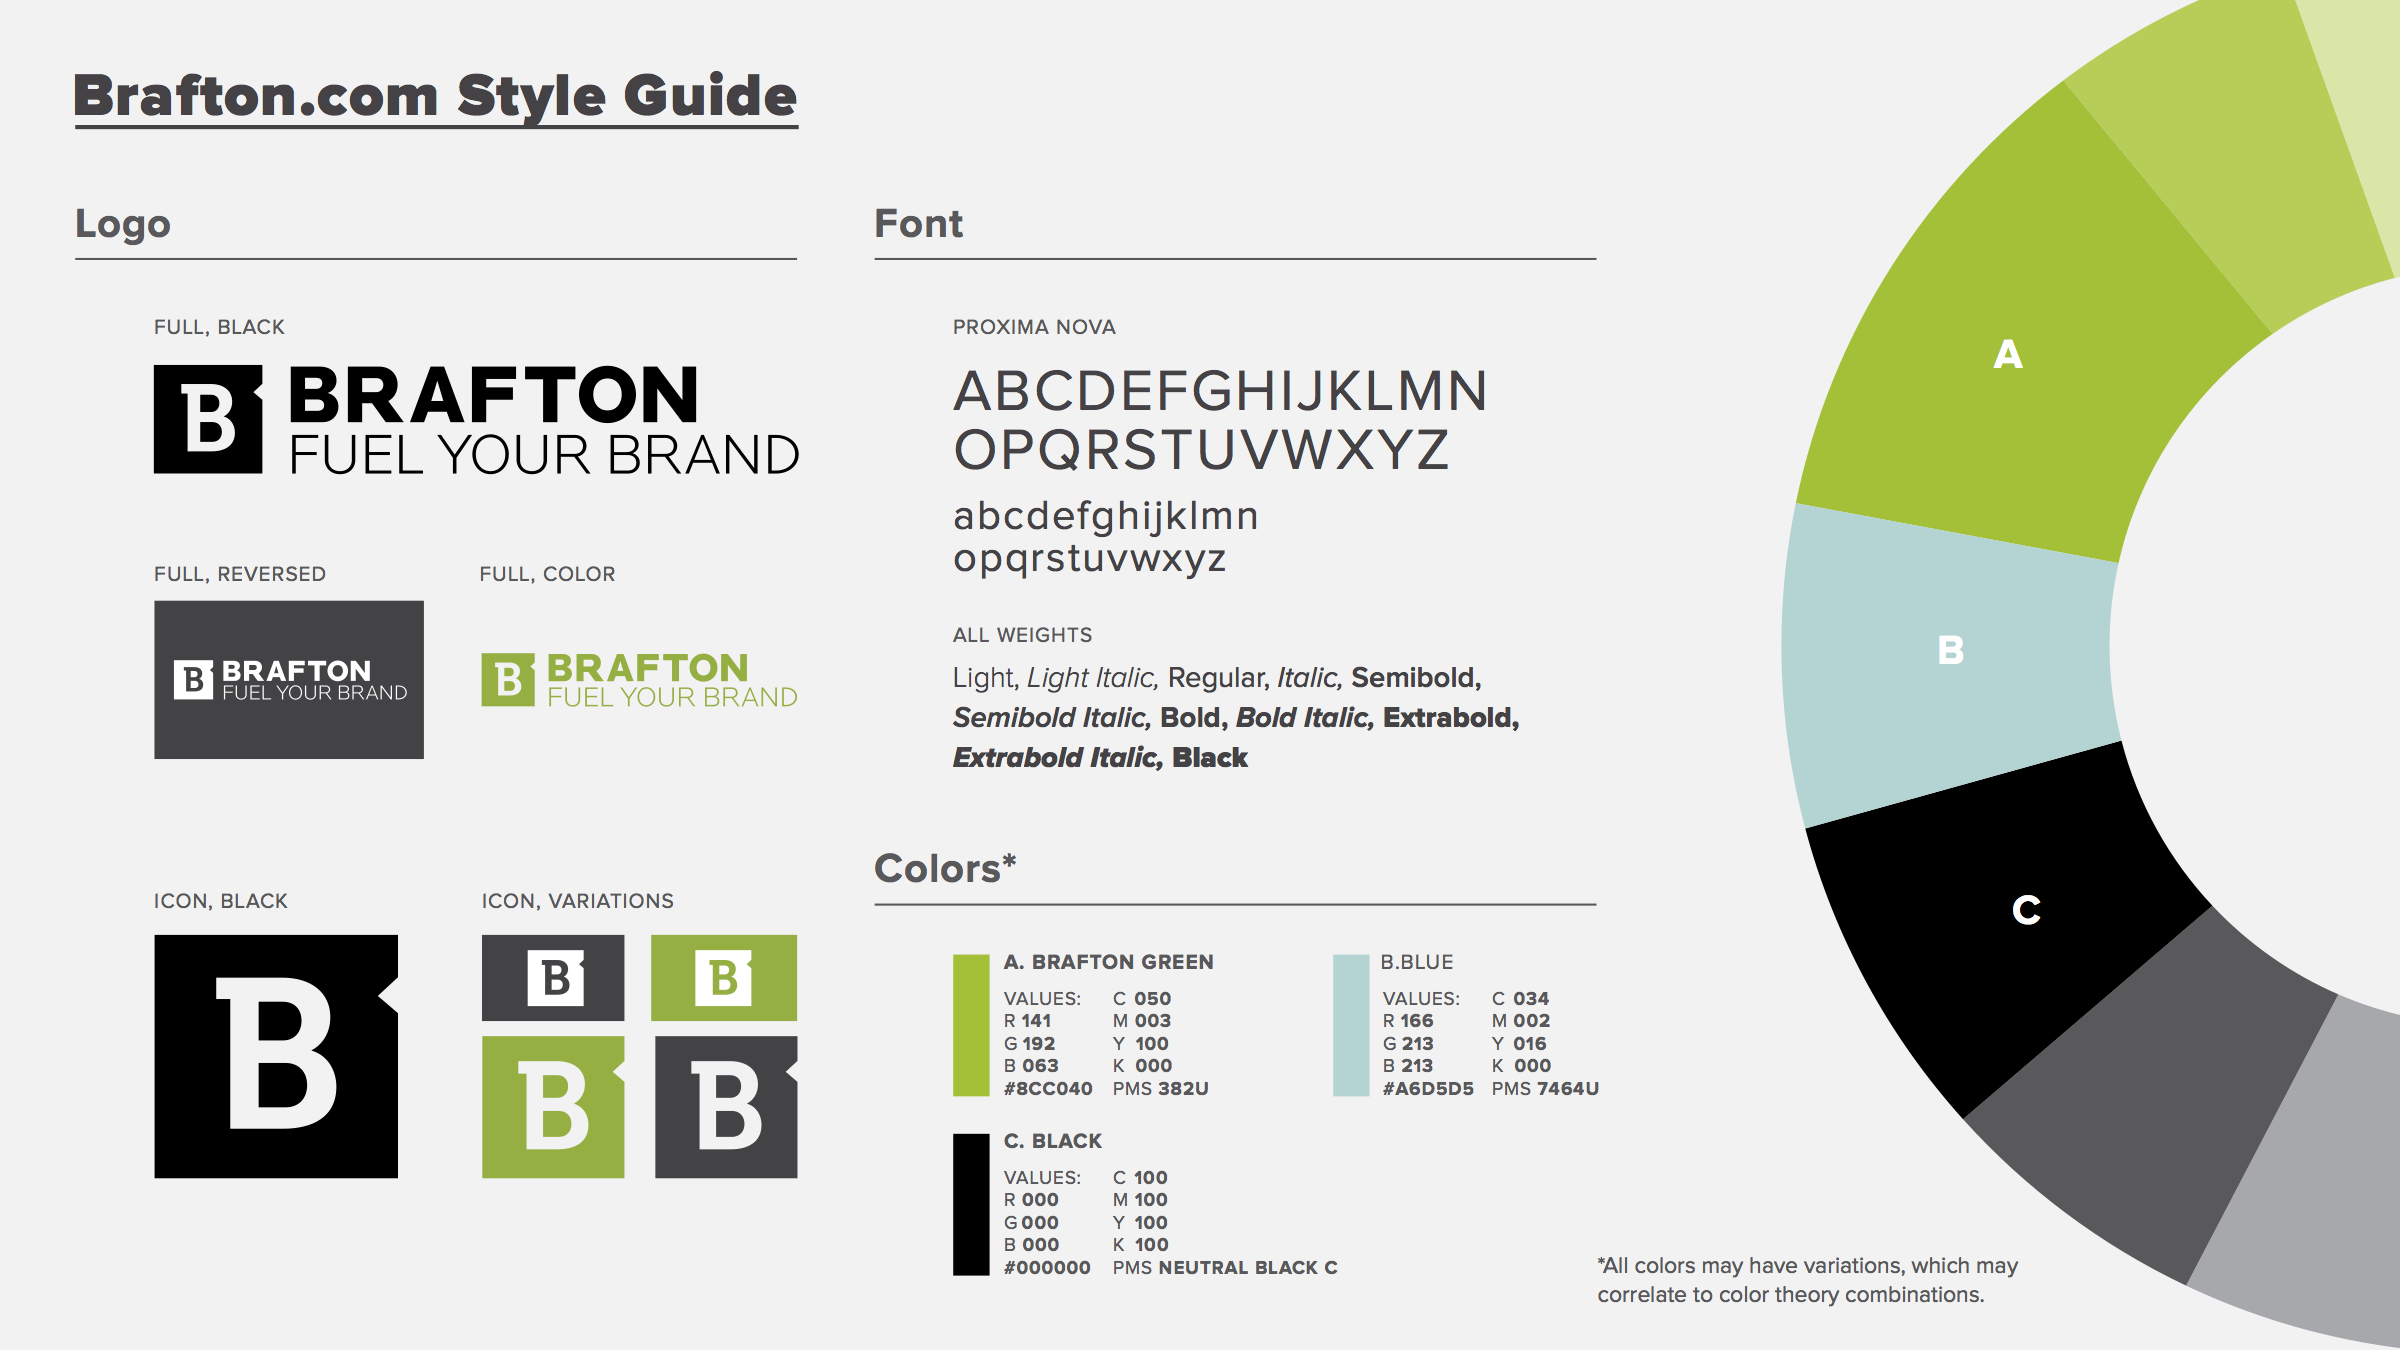 Brafton.com Style guide